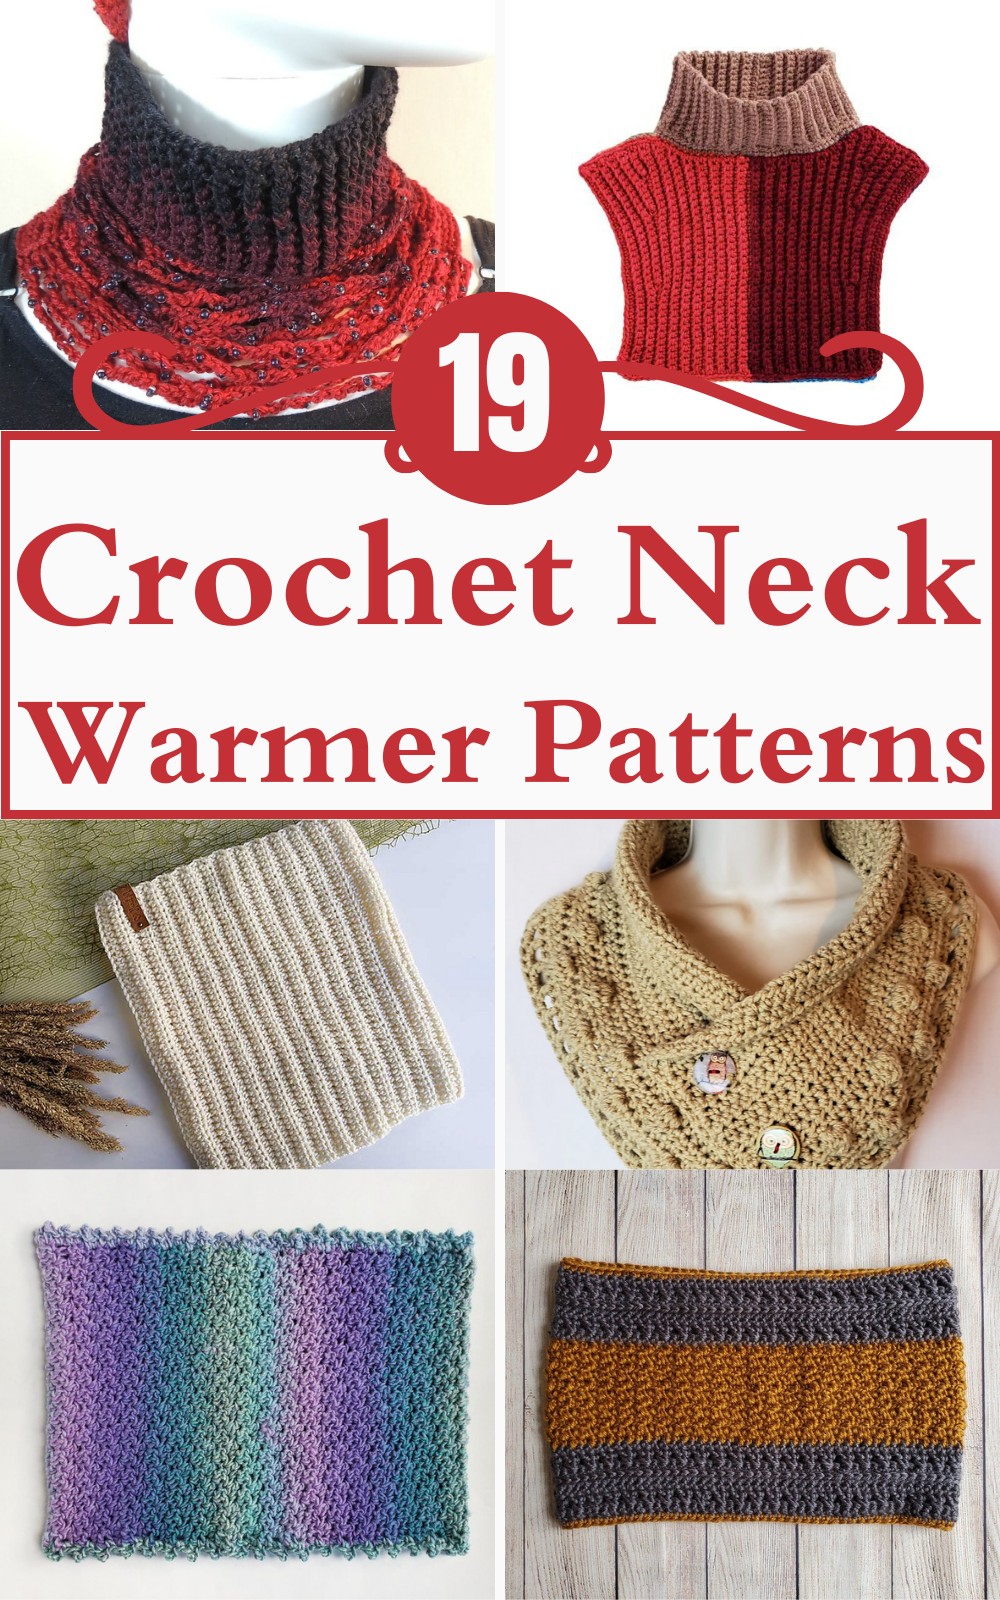 4 Free Crochet Neck Warmer Patterns